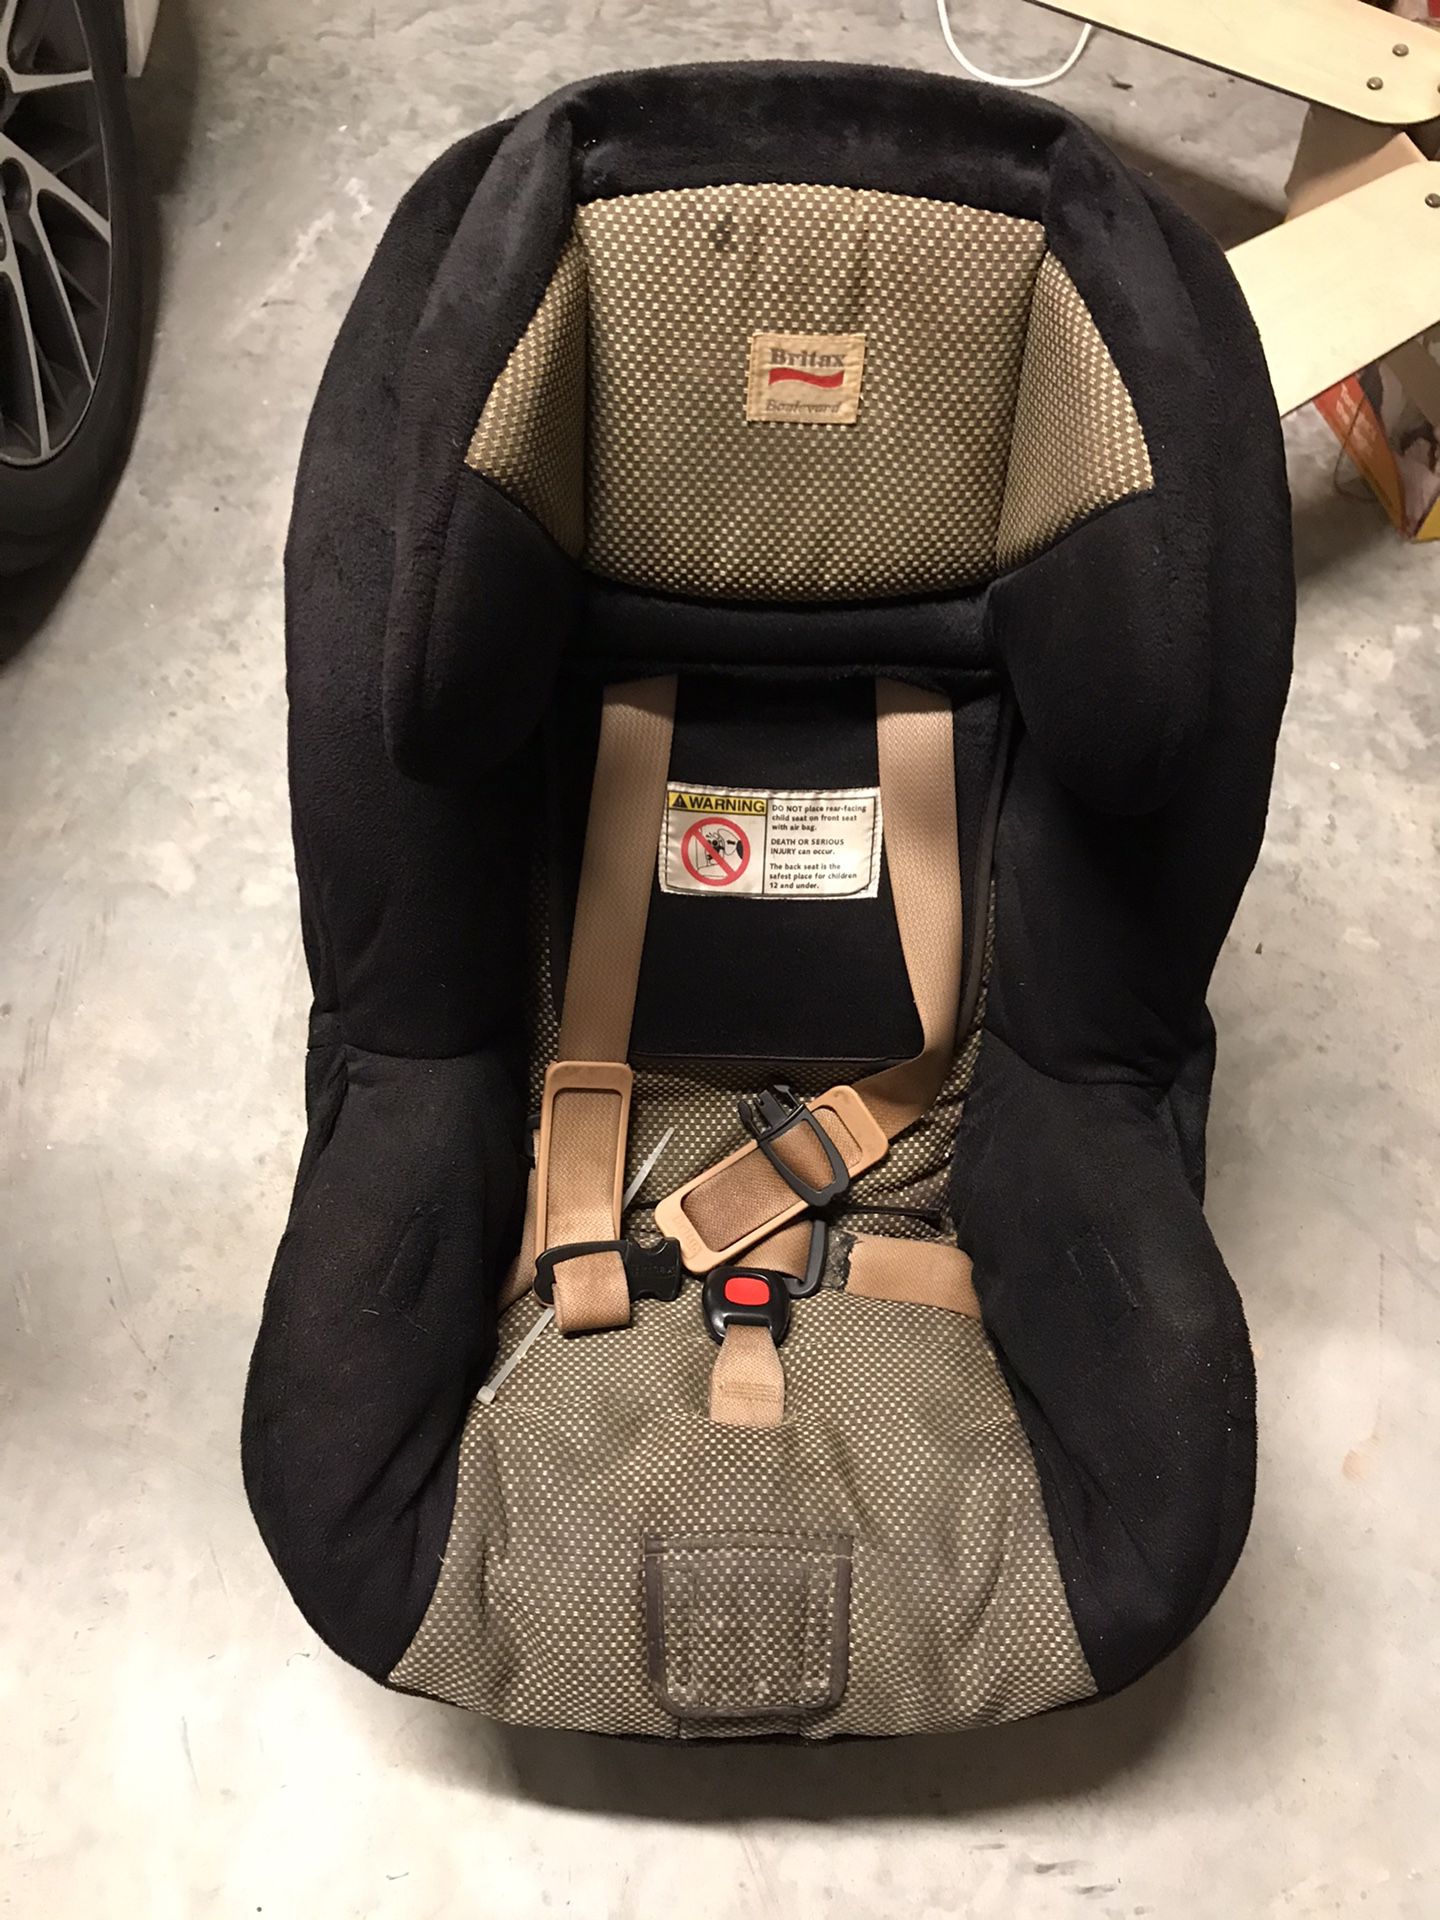 Britax baby car seat